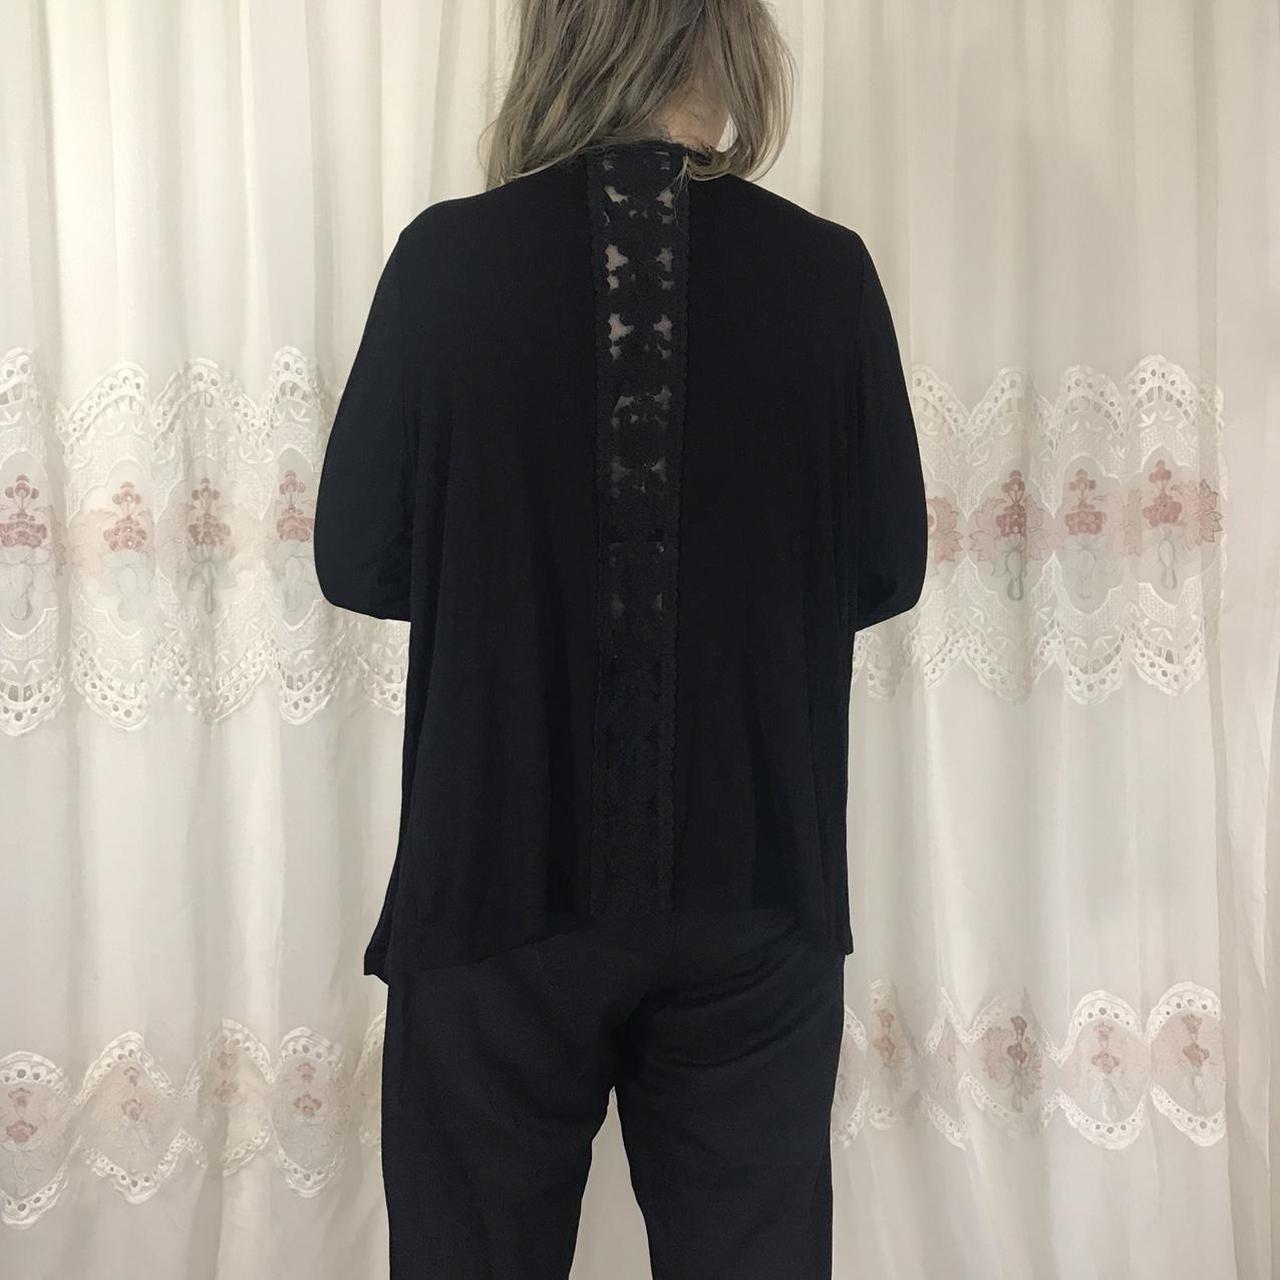 Product Image 3 - Black jersey cardigan, long sleeve